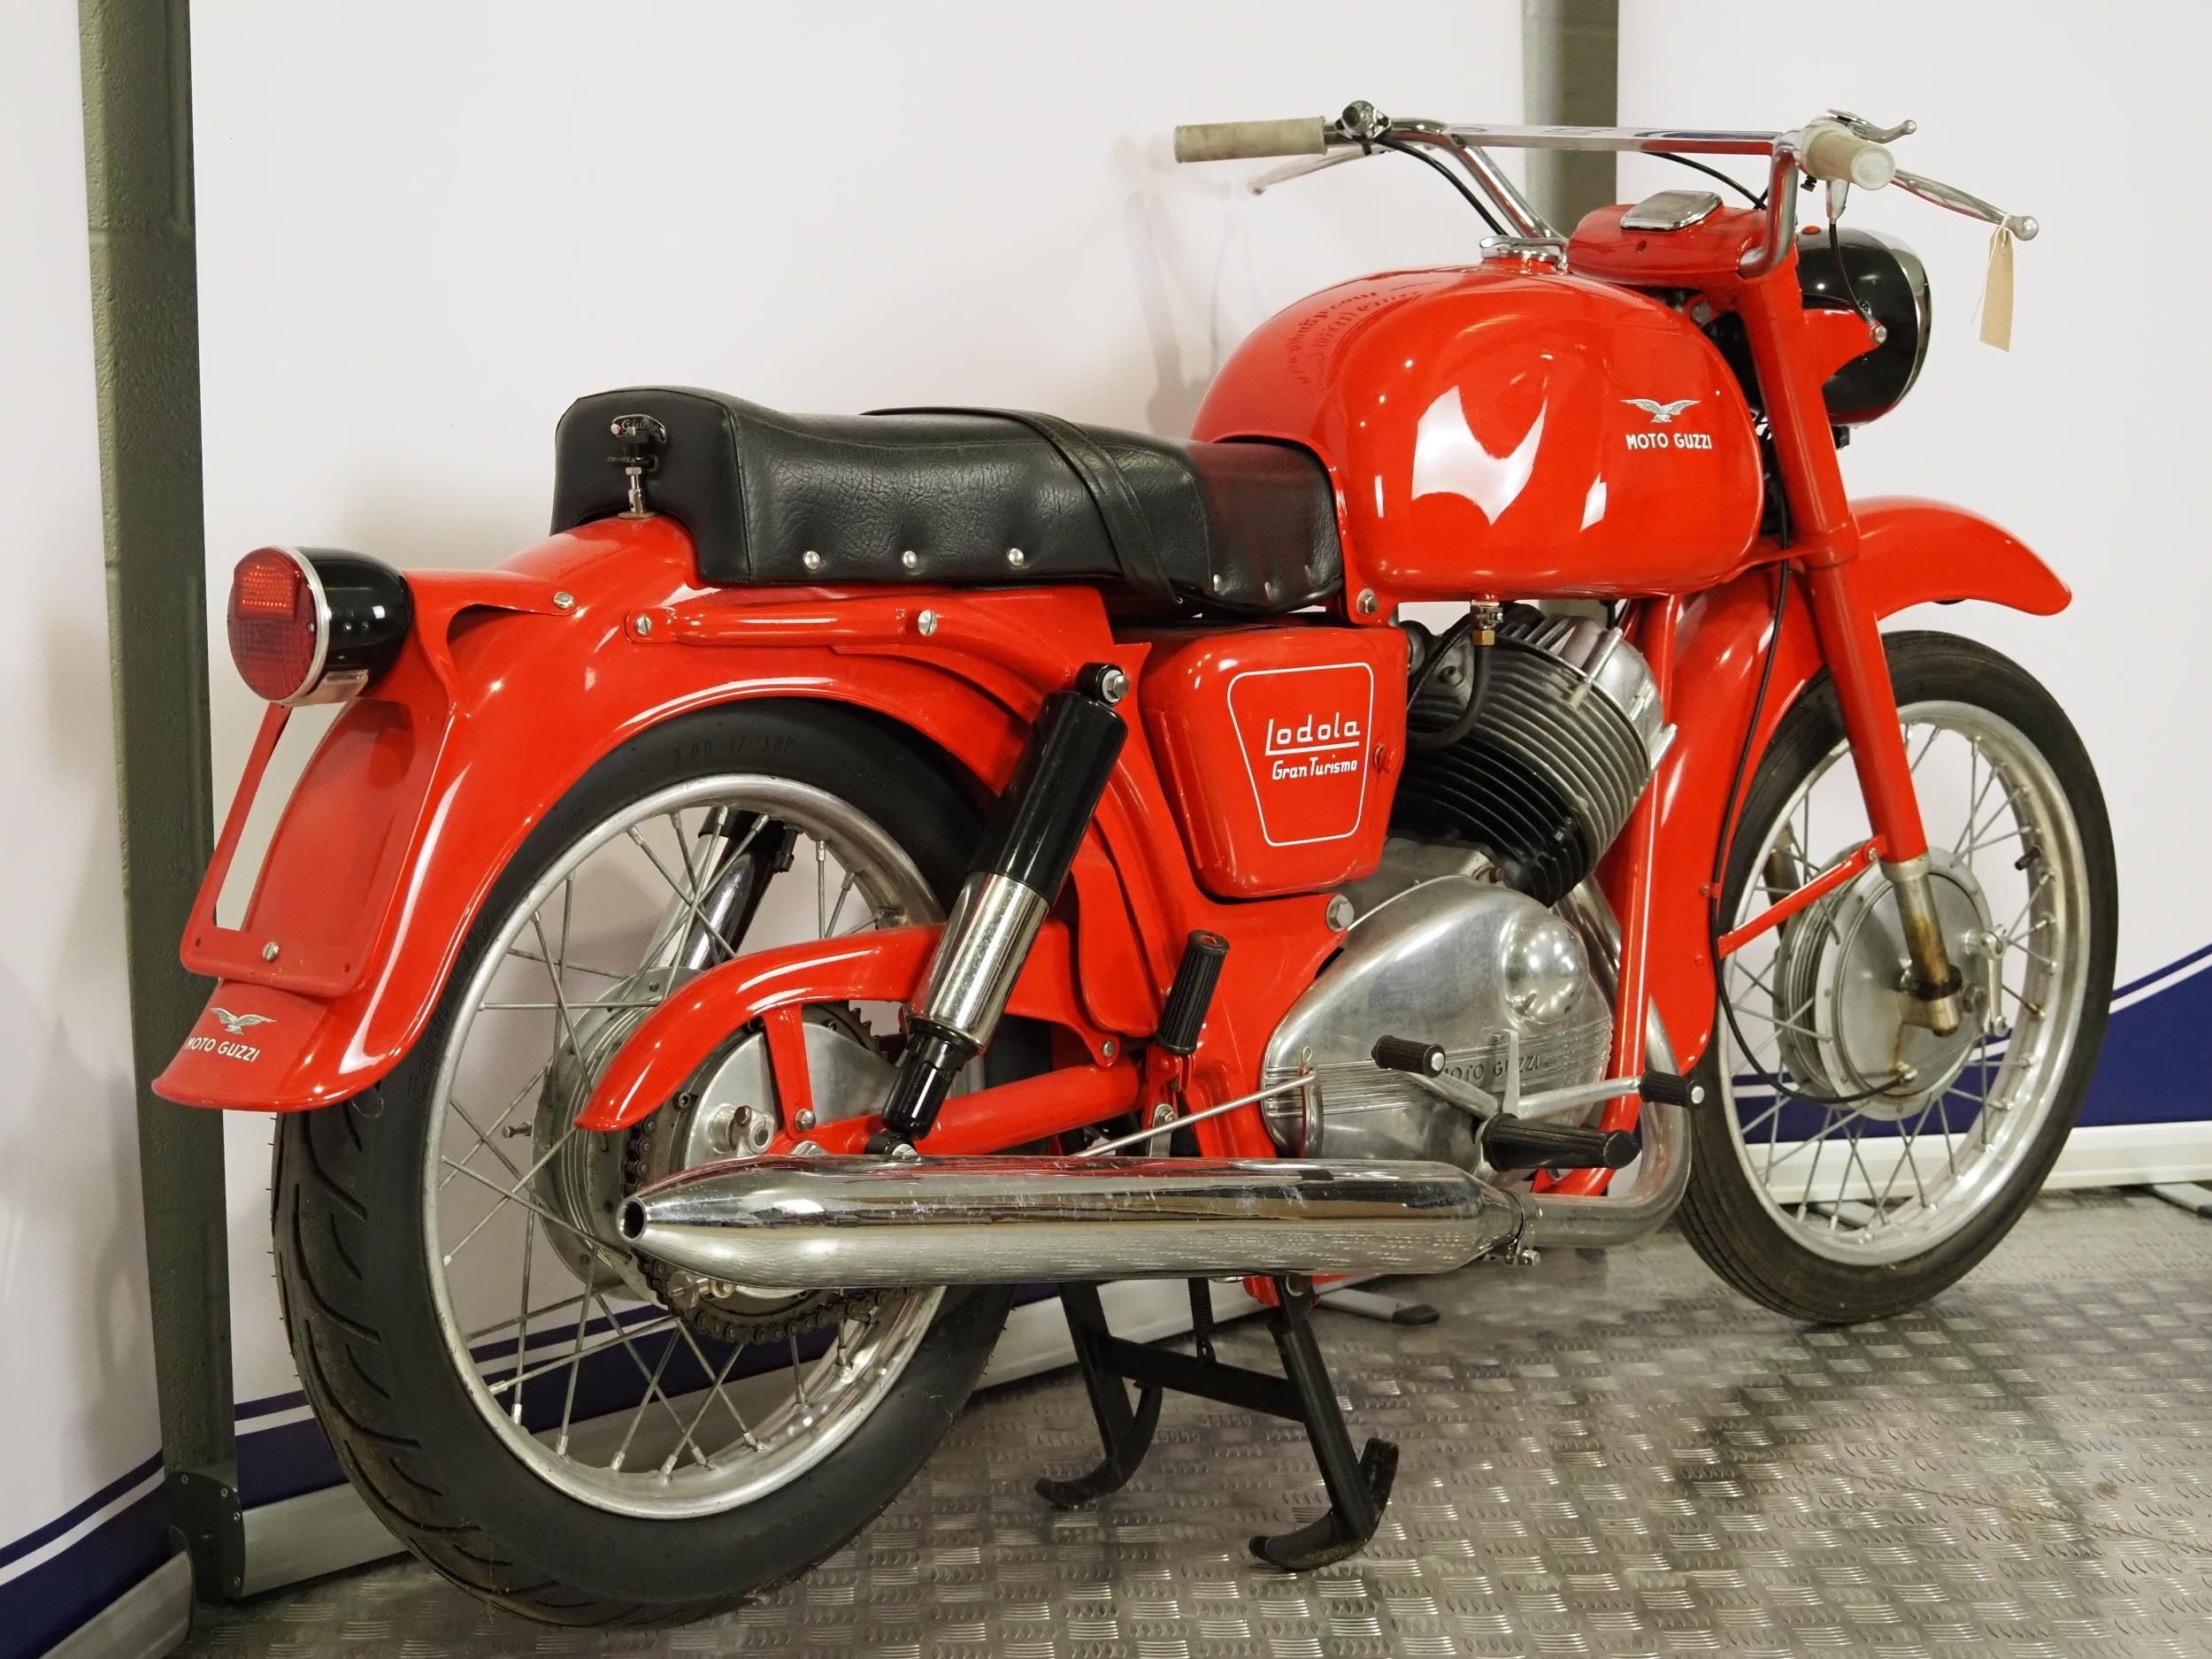 Moto Guzzi Lodola Gran Turismo motorcycle. 1961. 235cc Engine No. RDP36 Bike was last ridden in 2020 - Image 4 of 7